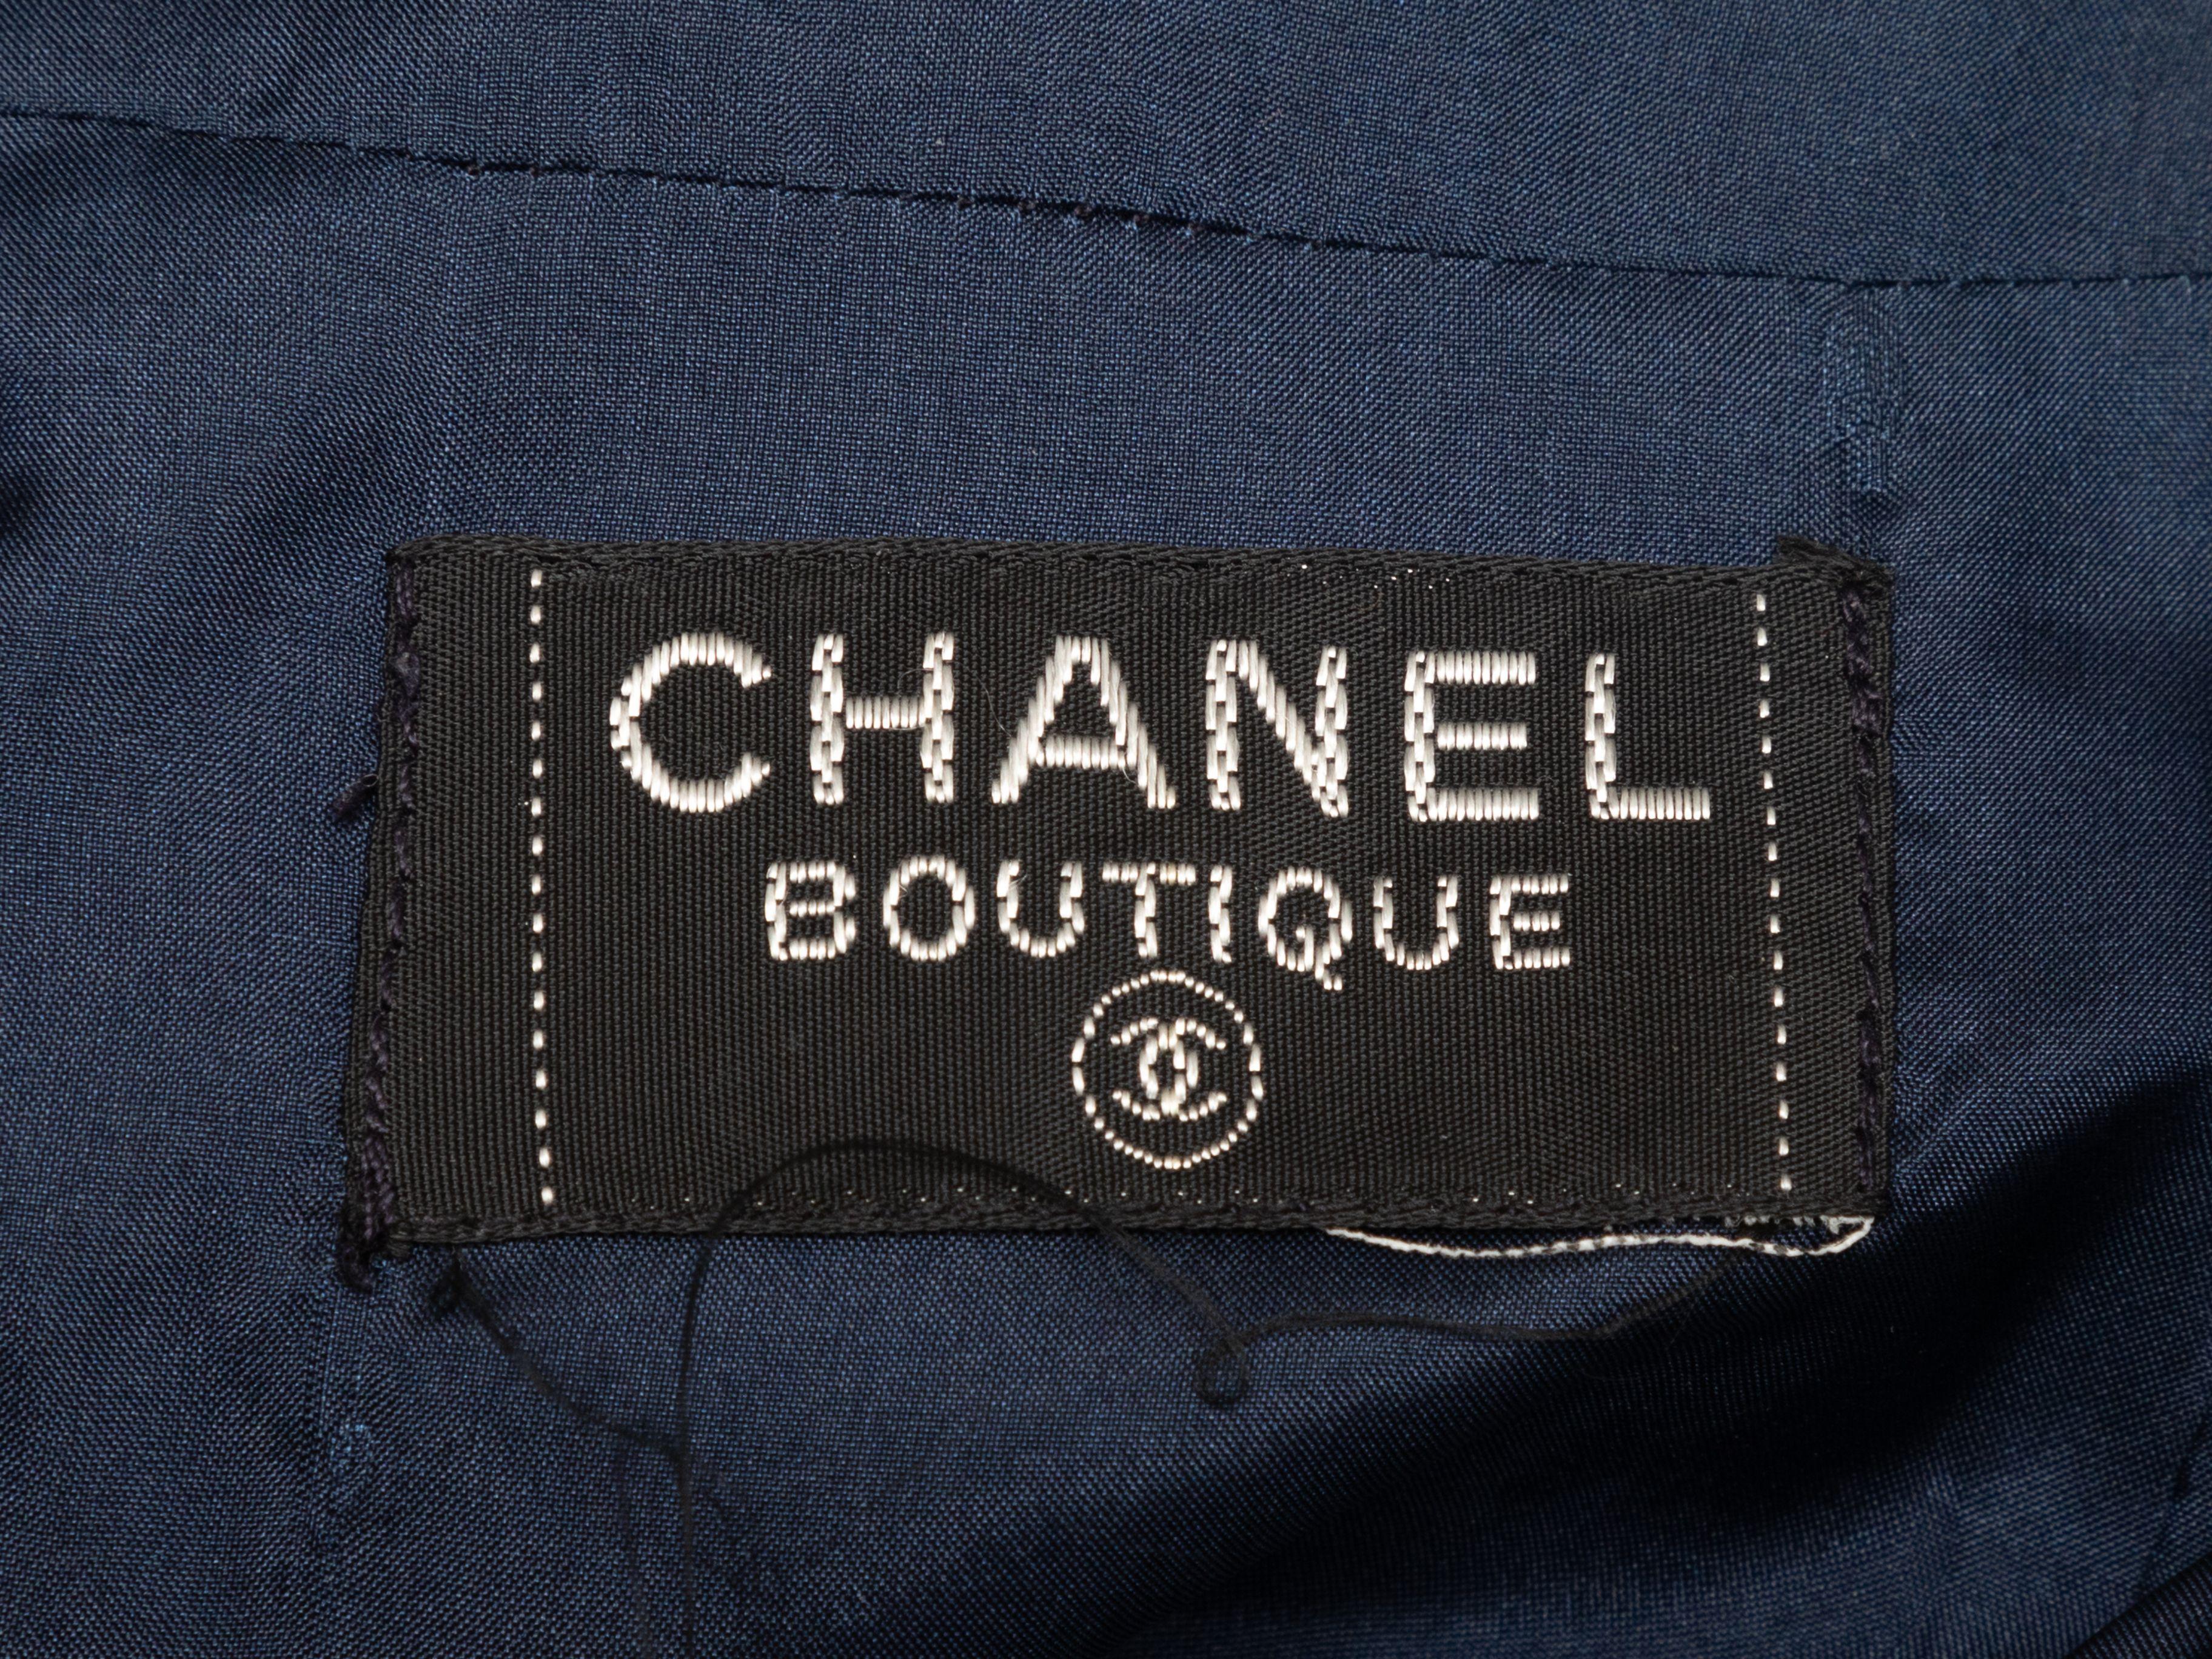 Product Details: Vintage black and multicolor glen plaid tweed pencil skirt by Chanel Boutique. Back zip closure. 32